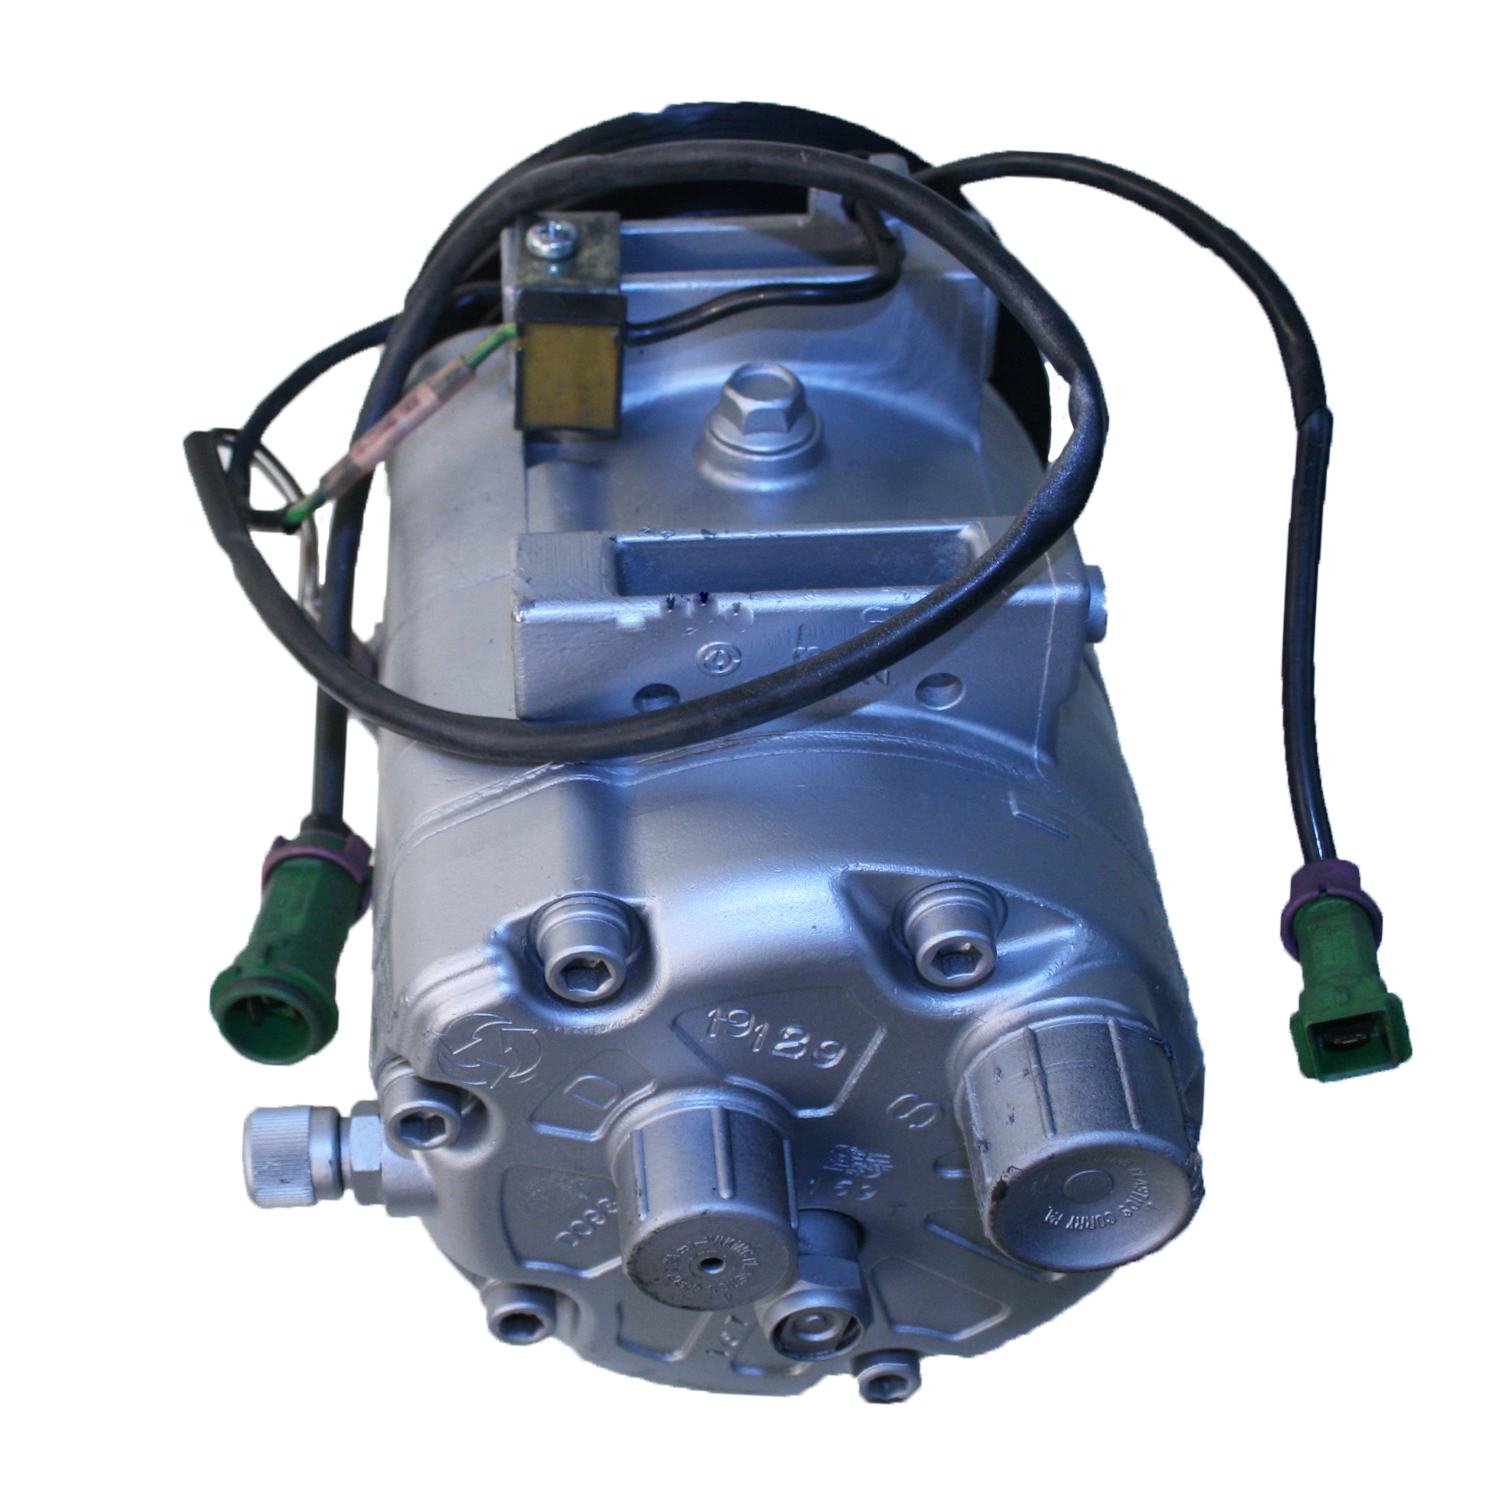 TCW Compressor 12520.601 Remanufactured Product Image field_60b6a13a6e67c